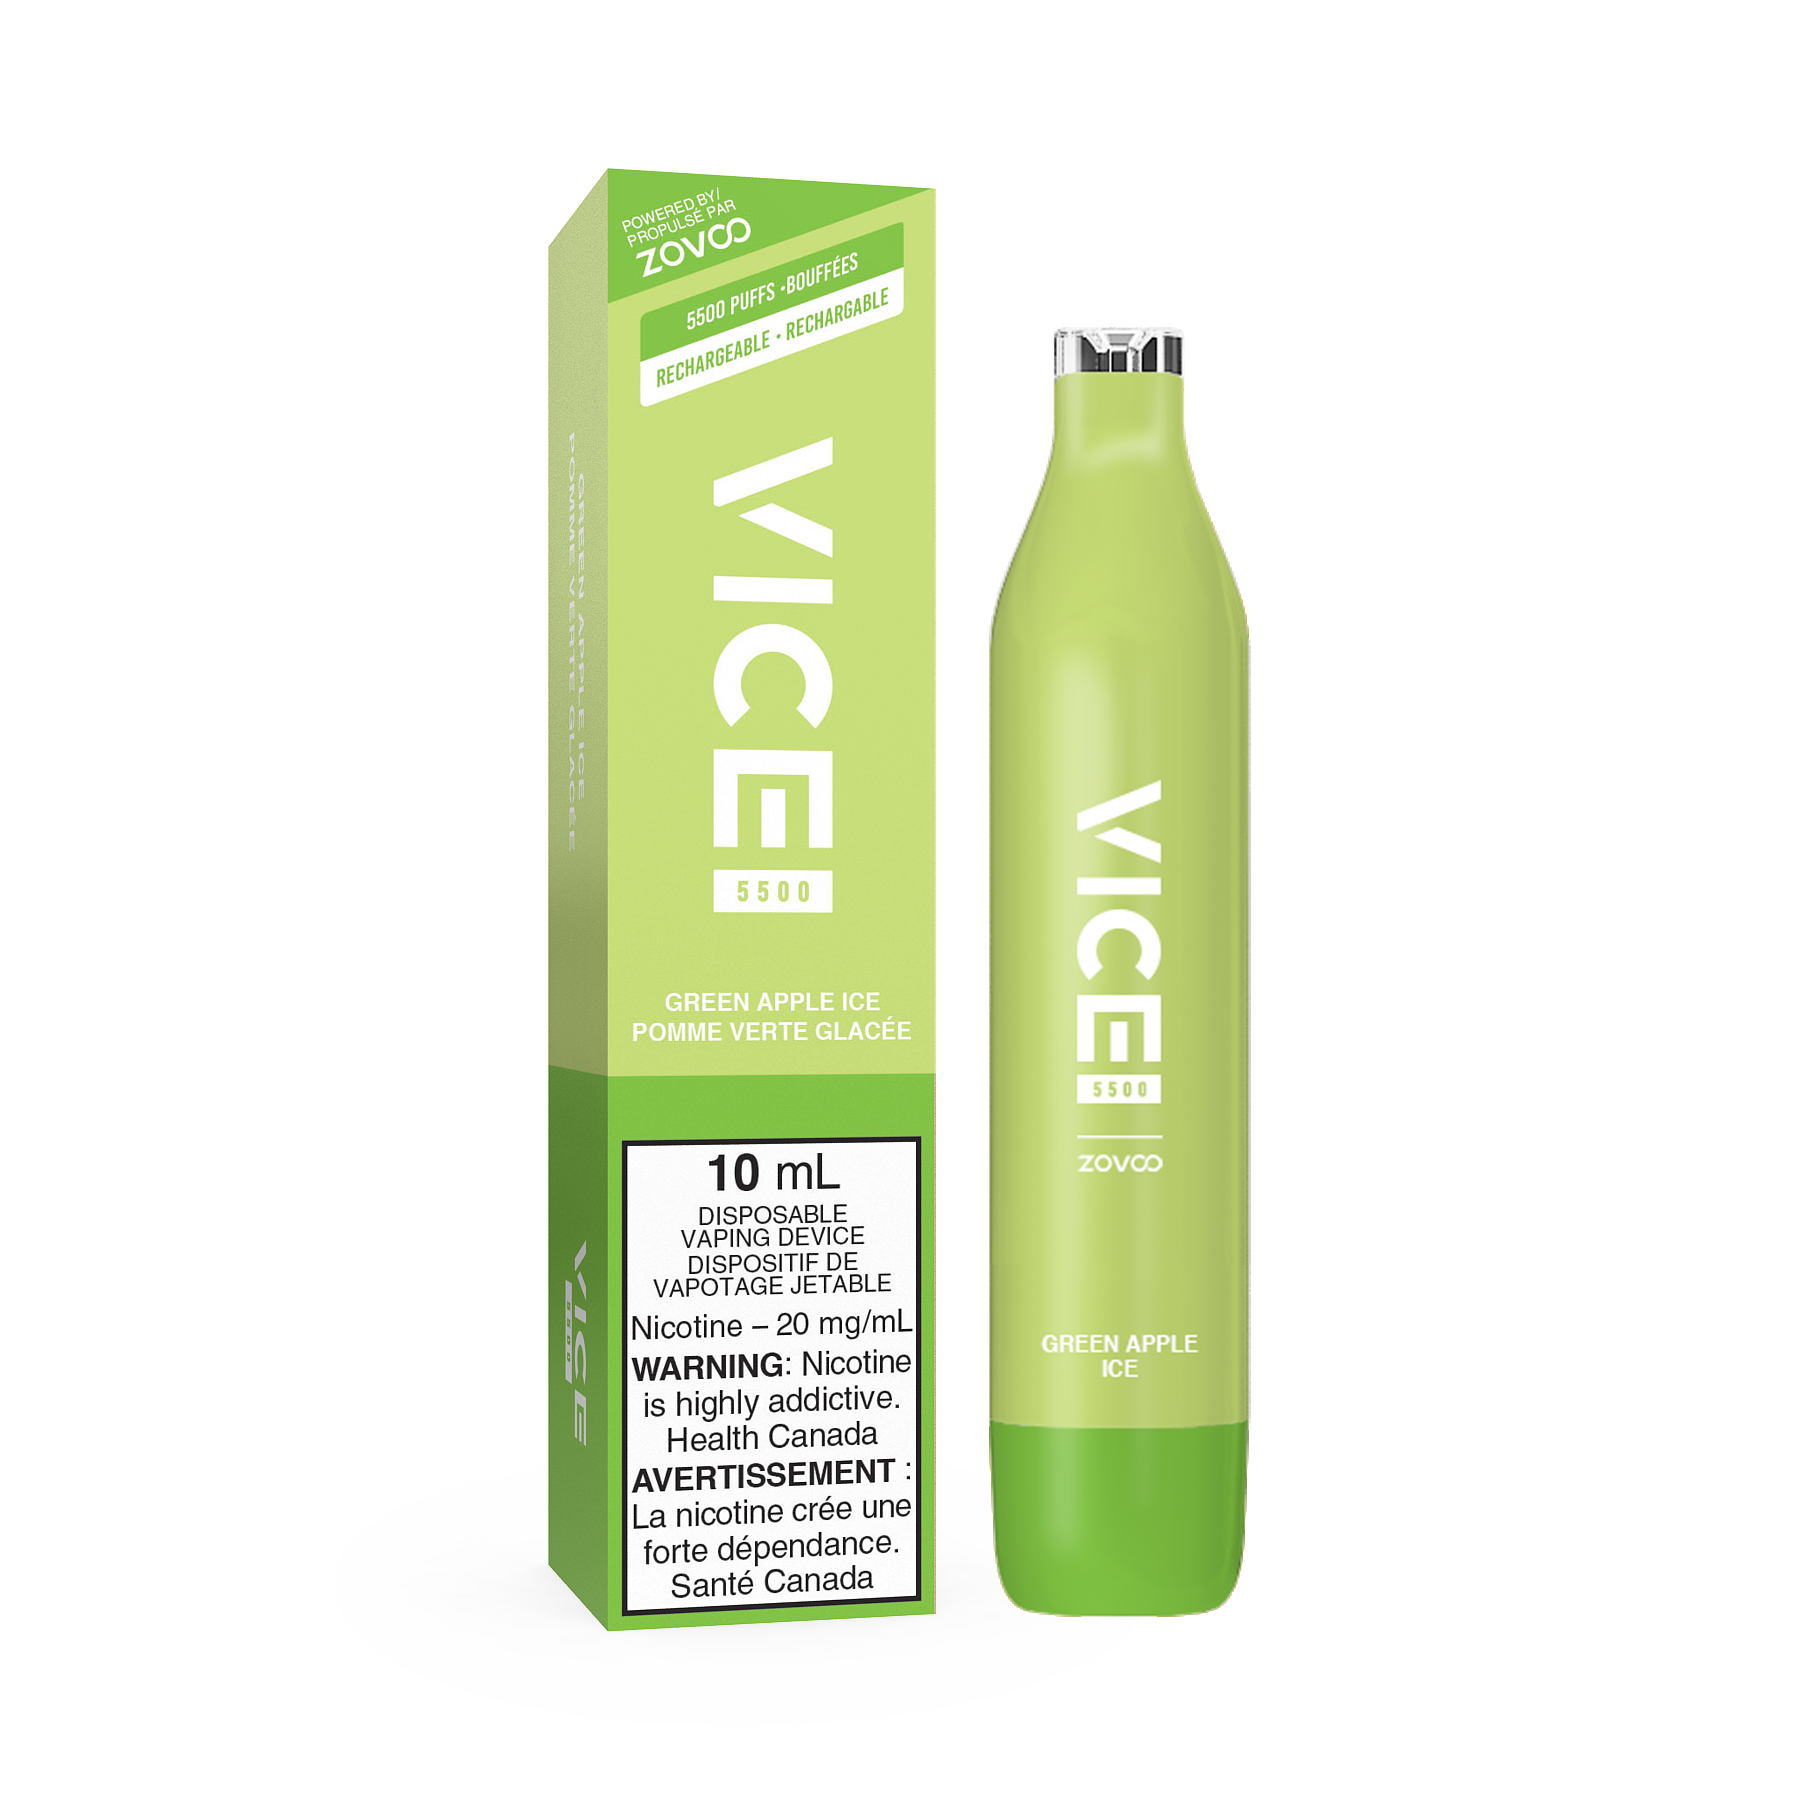 Green Apple Ice - VICE 5500 - 20mg - 6pc/box